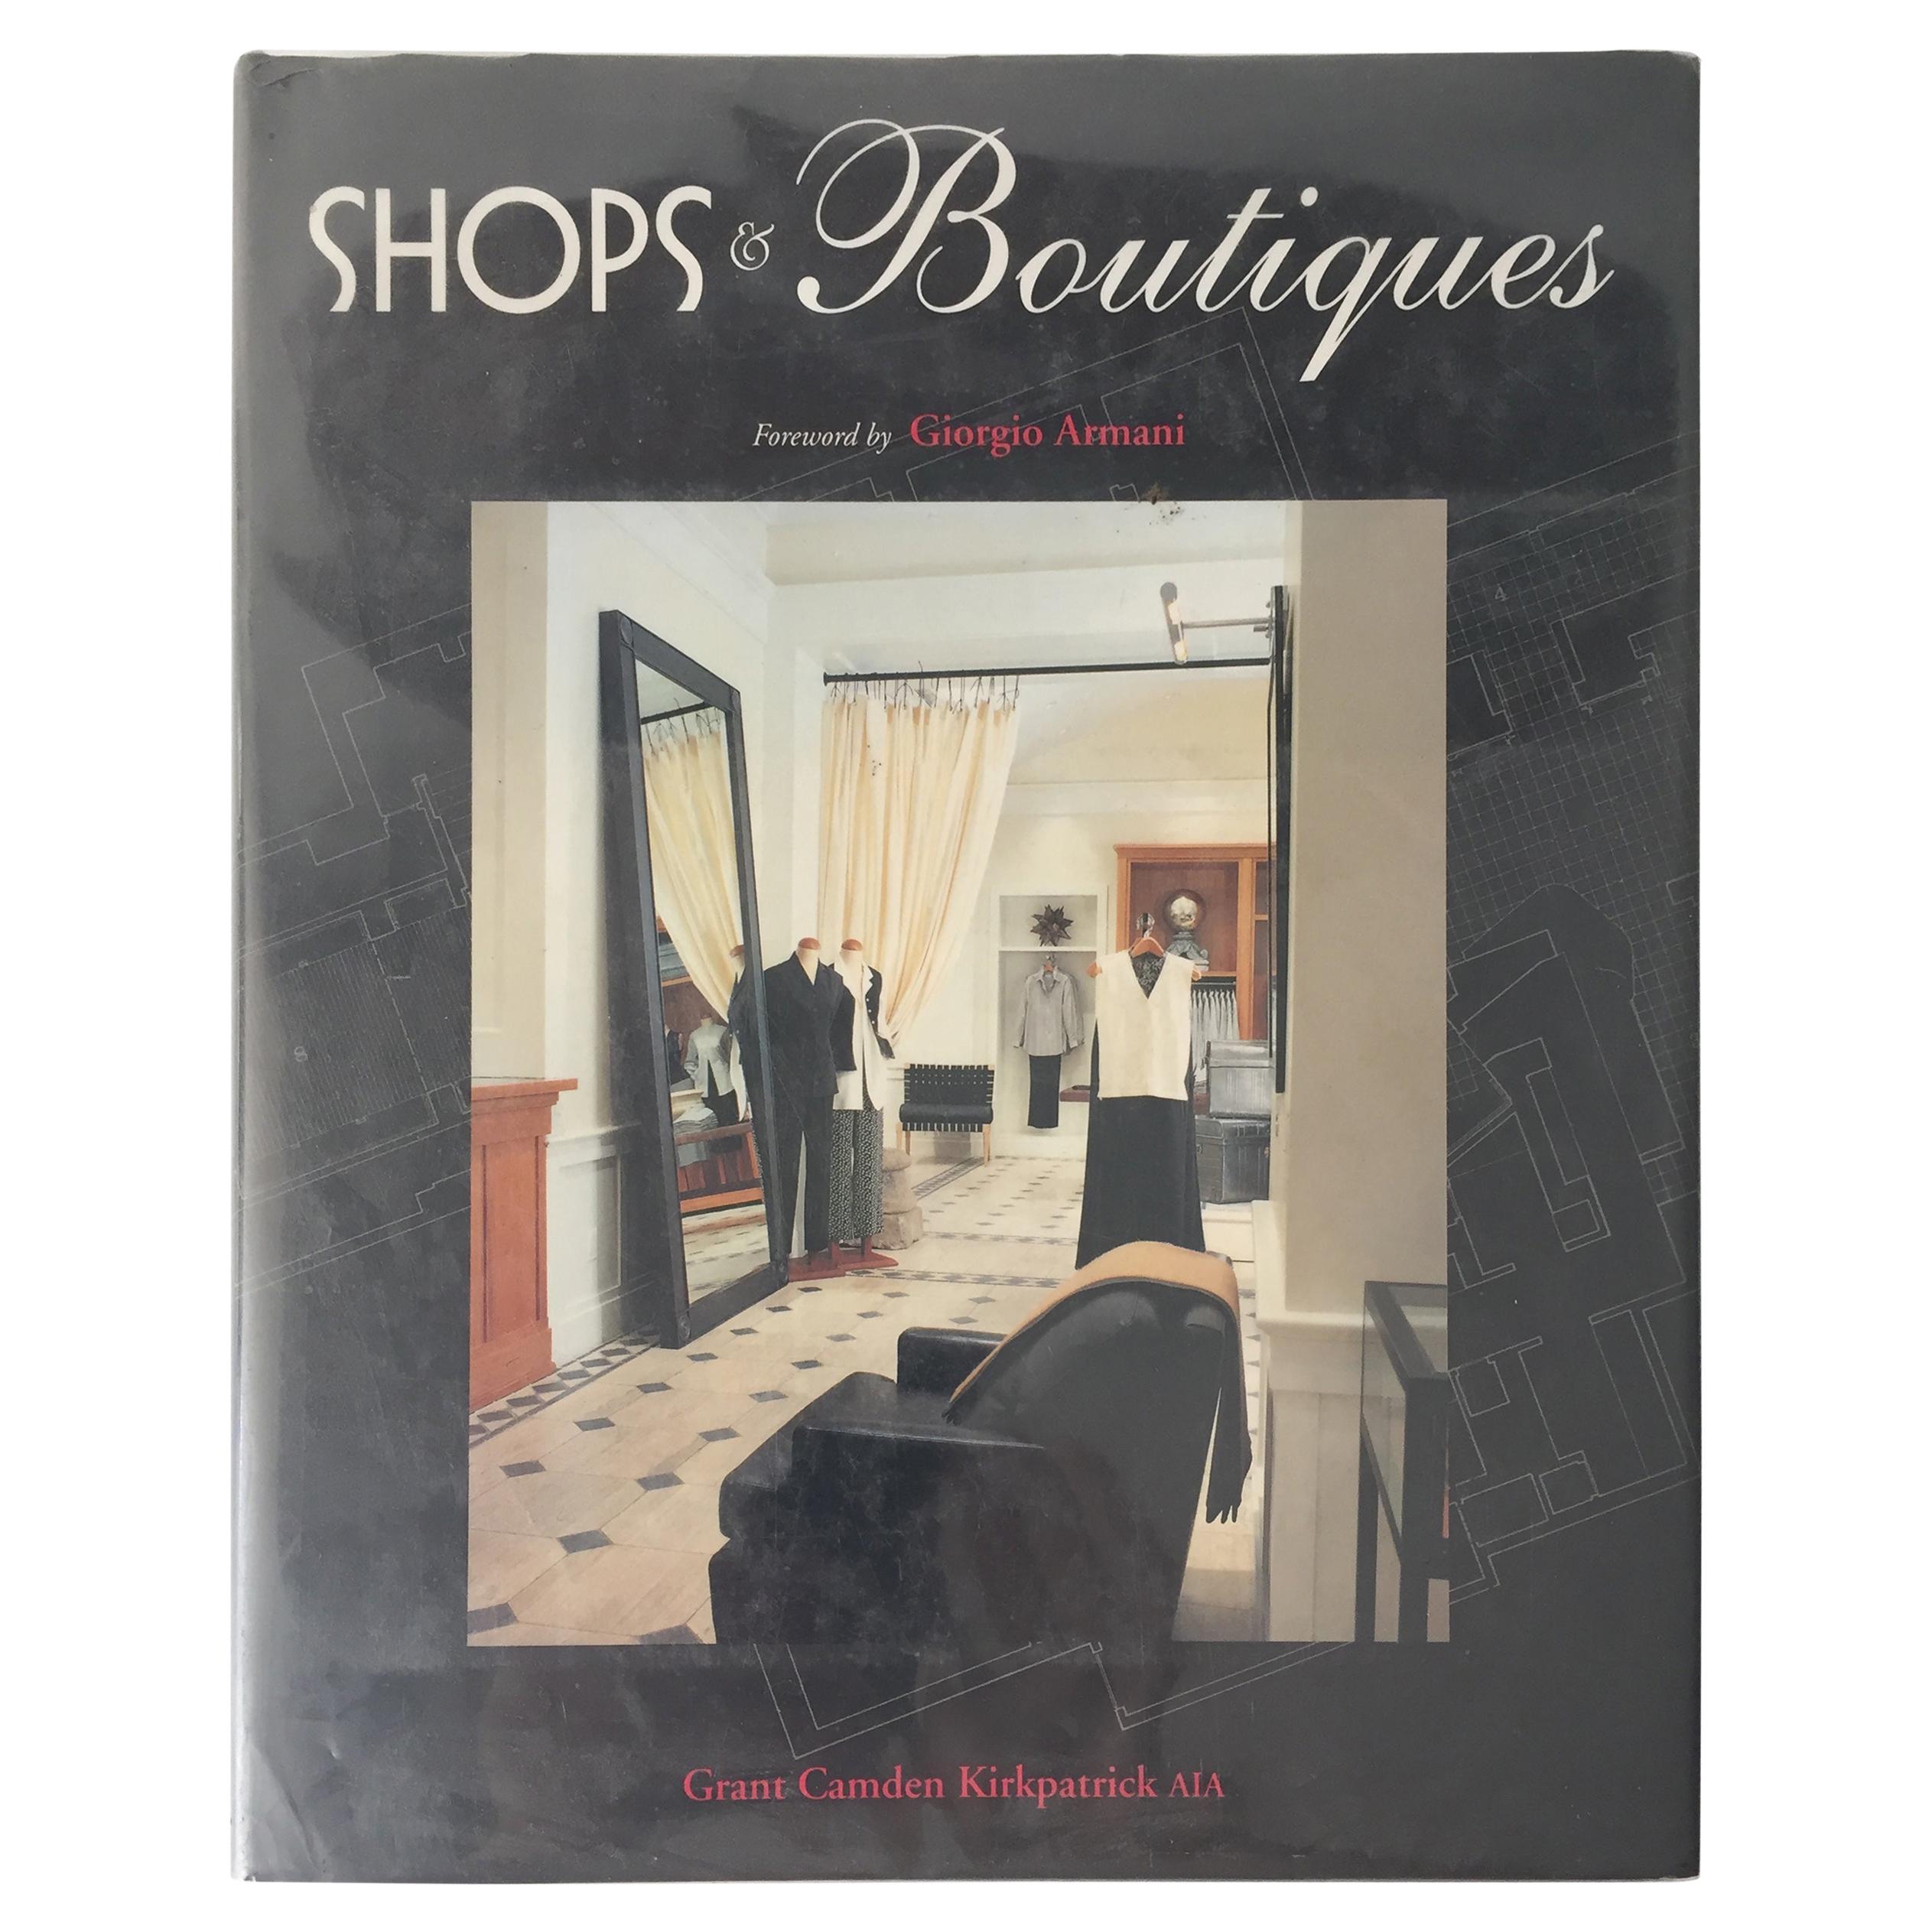 Shops & Boutiques, Foreword de Giorgio Armani par Grant Camden Kirkkpatric AIA